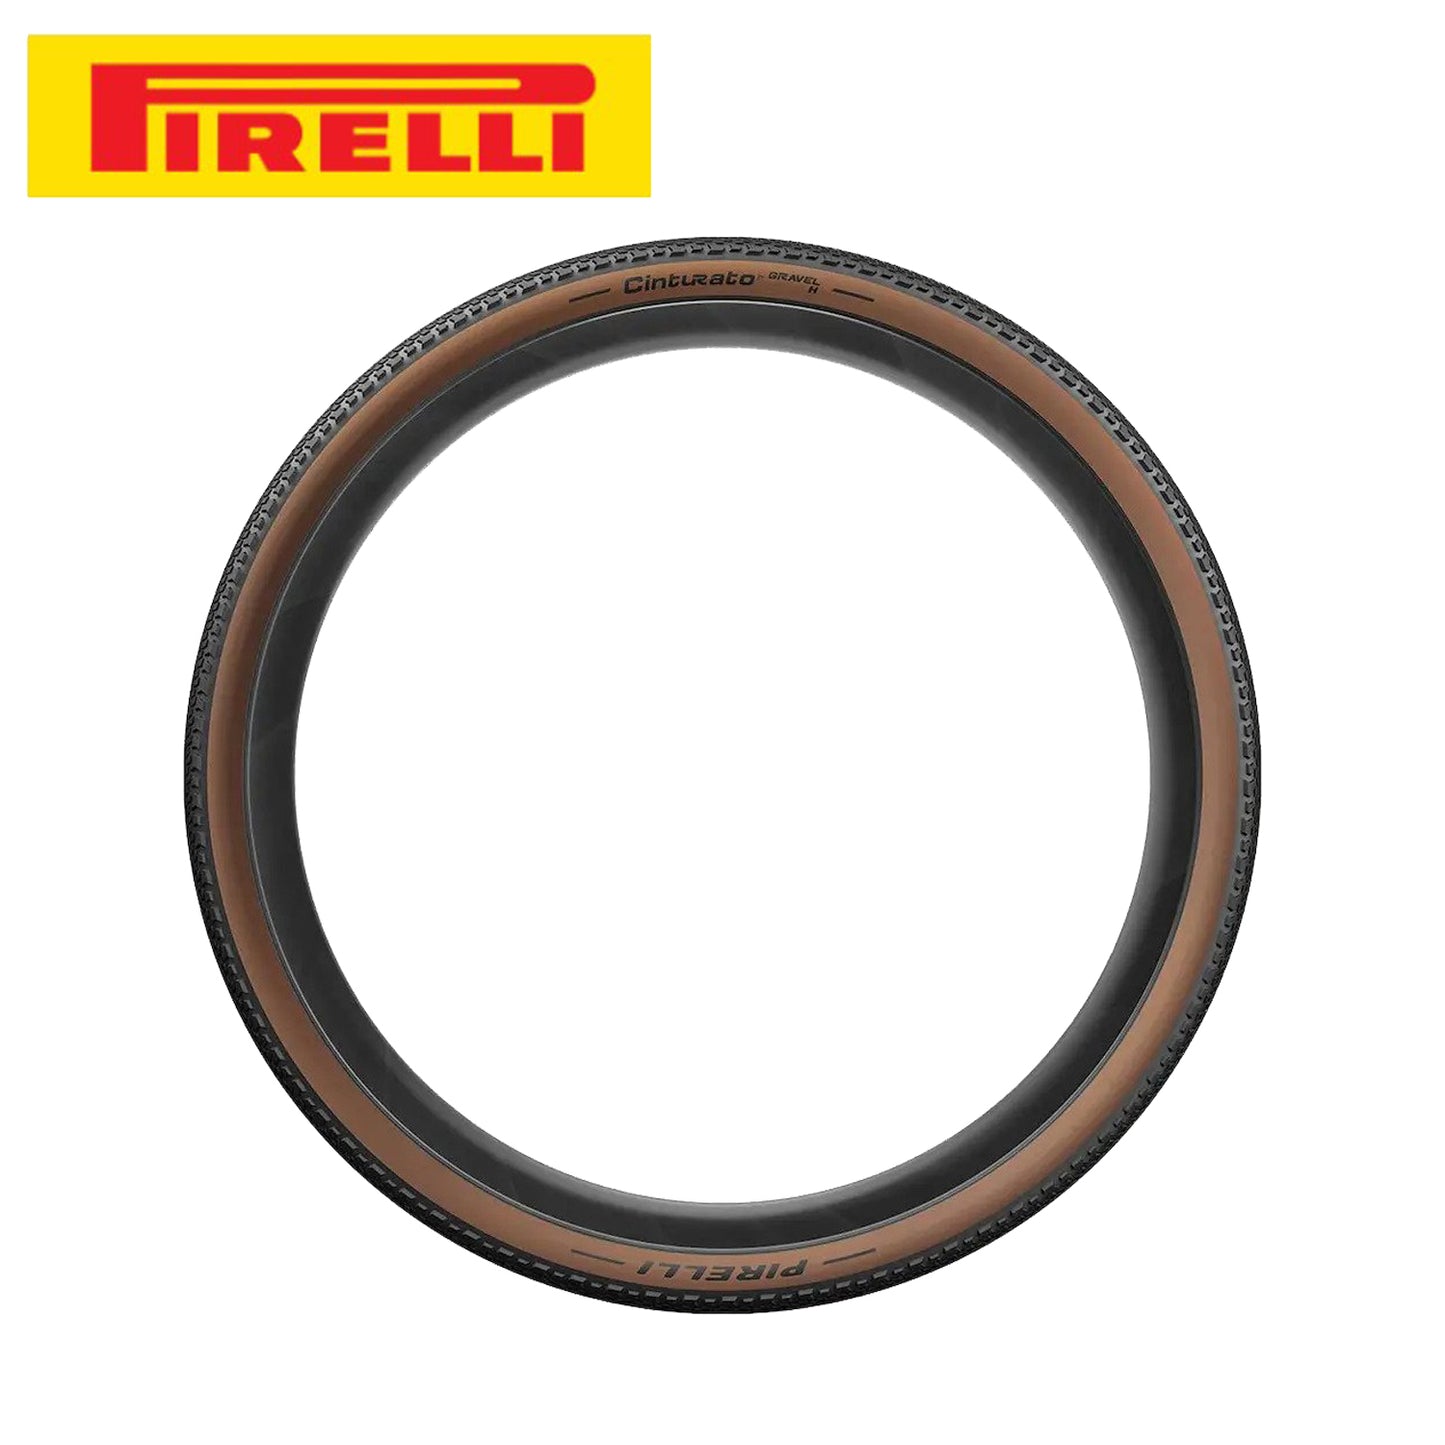 Pirelli Cinturato Gravel H 650b Tubeless Bike Tire SpeedGrip - Tan